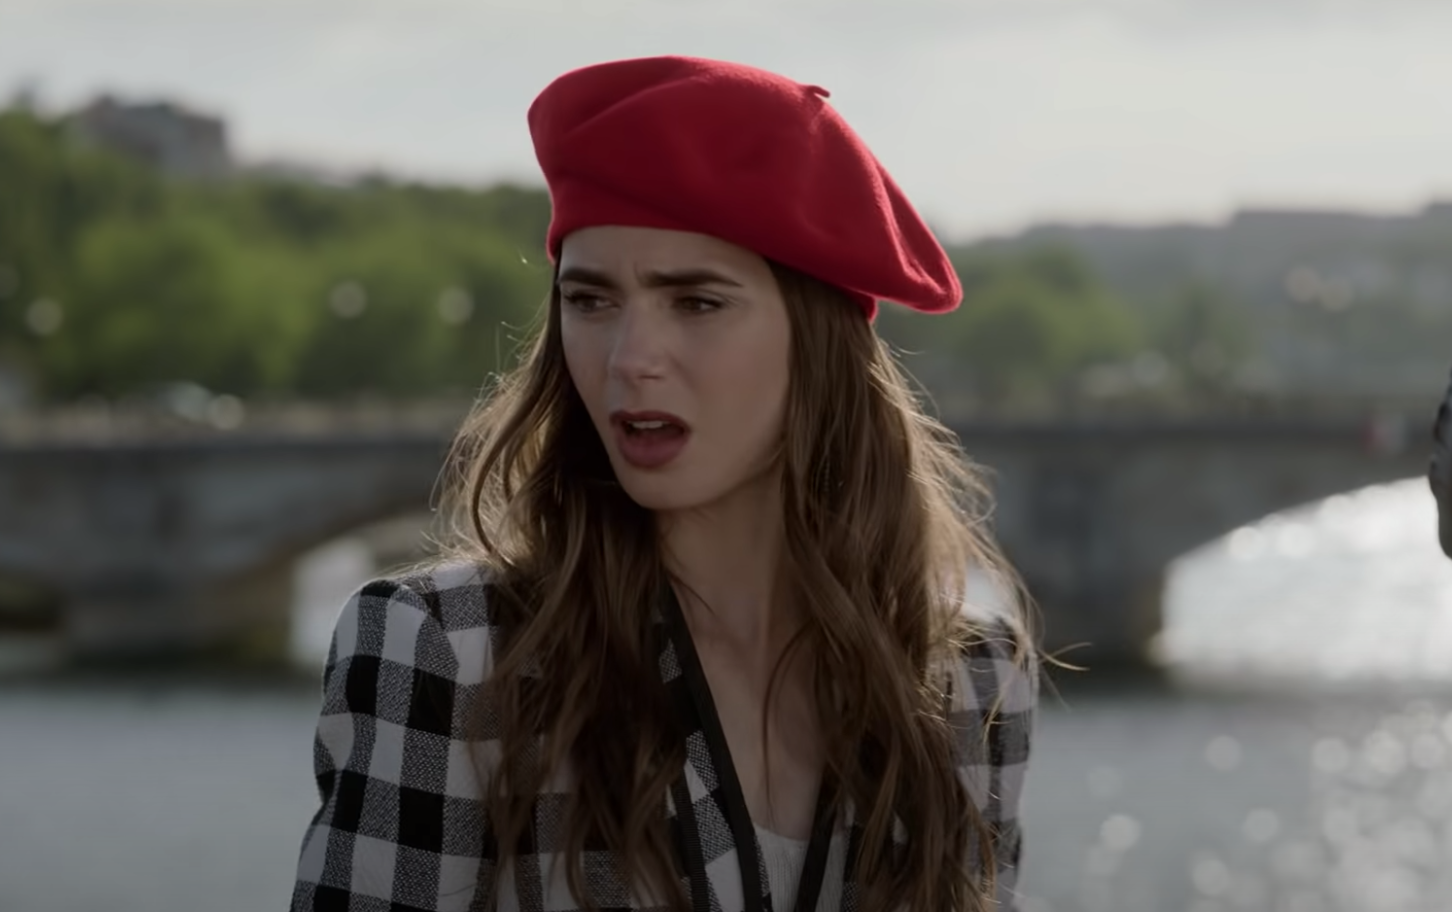 Emily in a beret looking upset in &quot;Emily in Paris&quot;